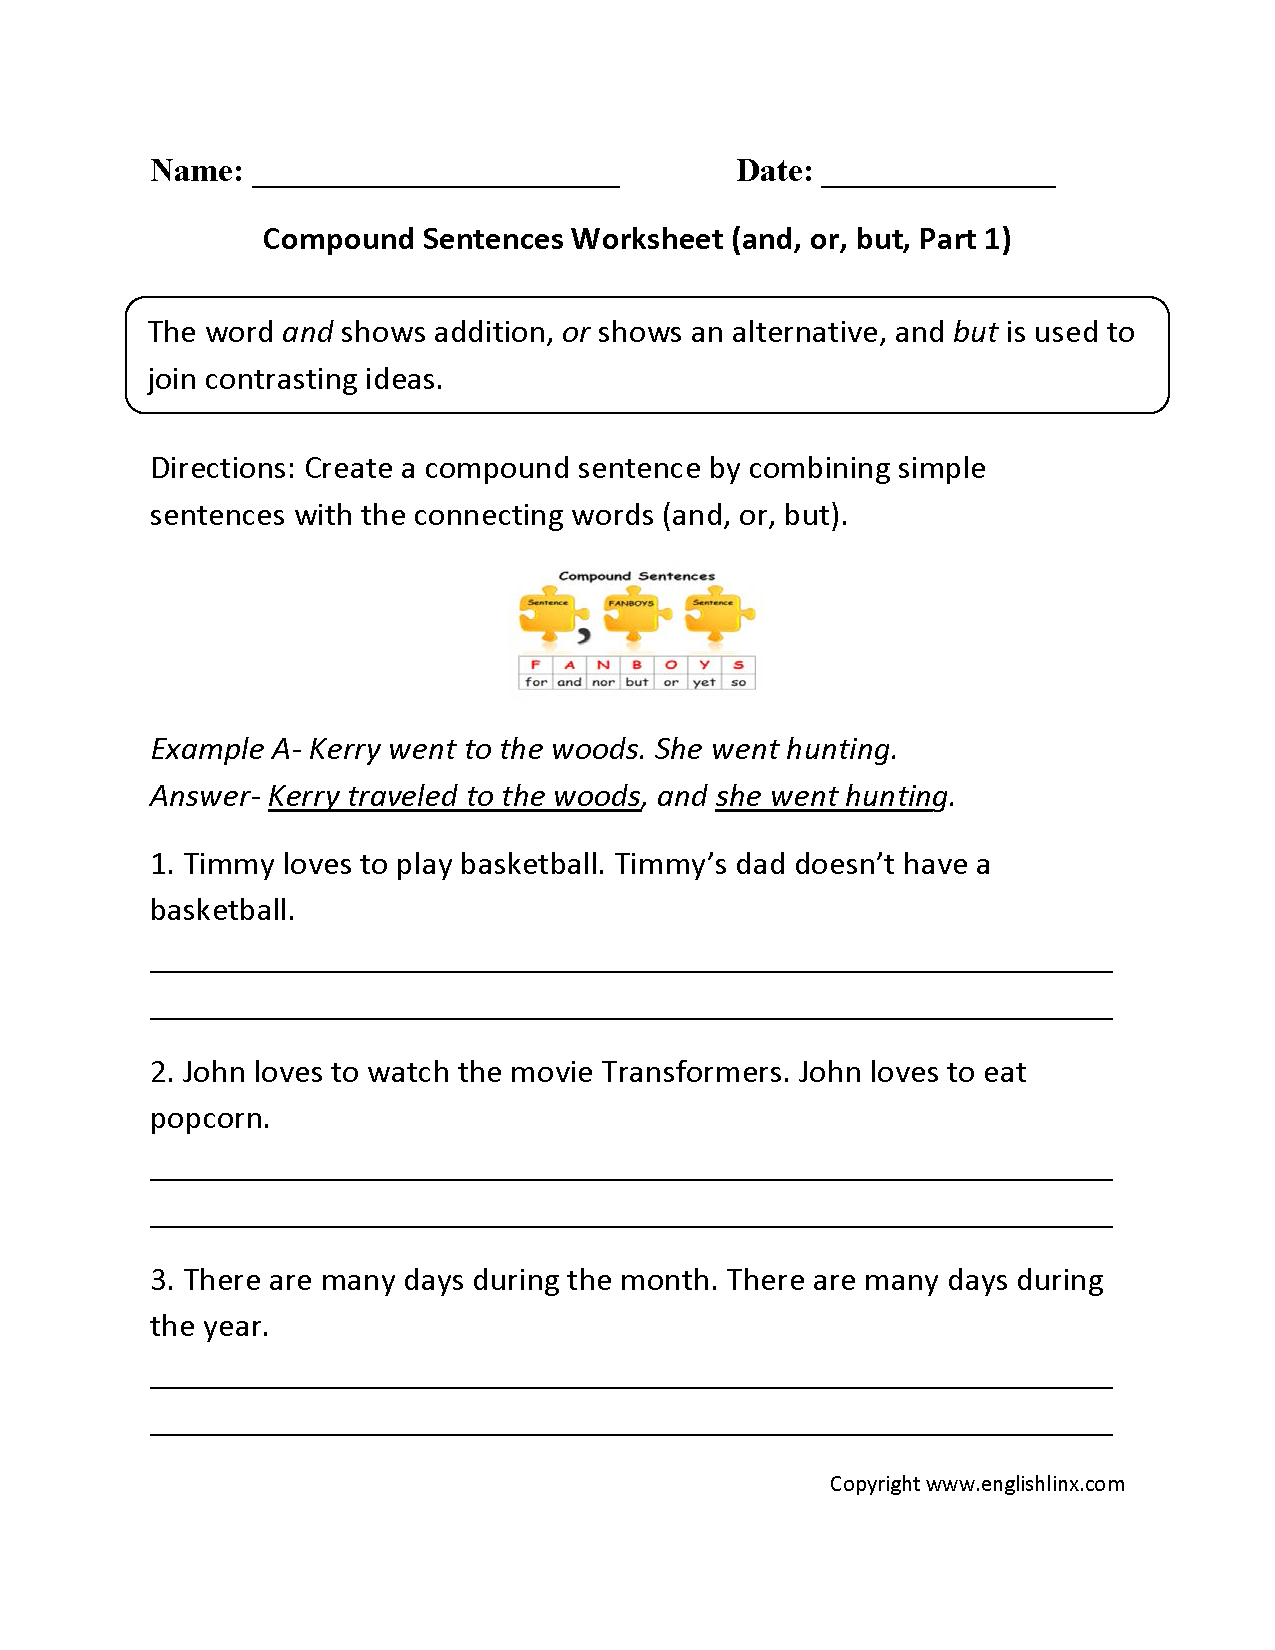 Compound Sentences Worksheet Free